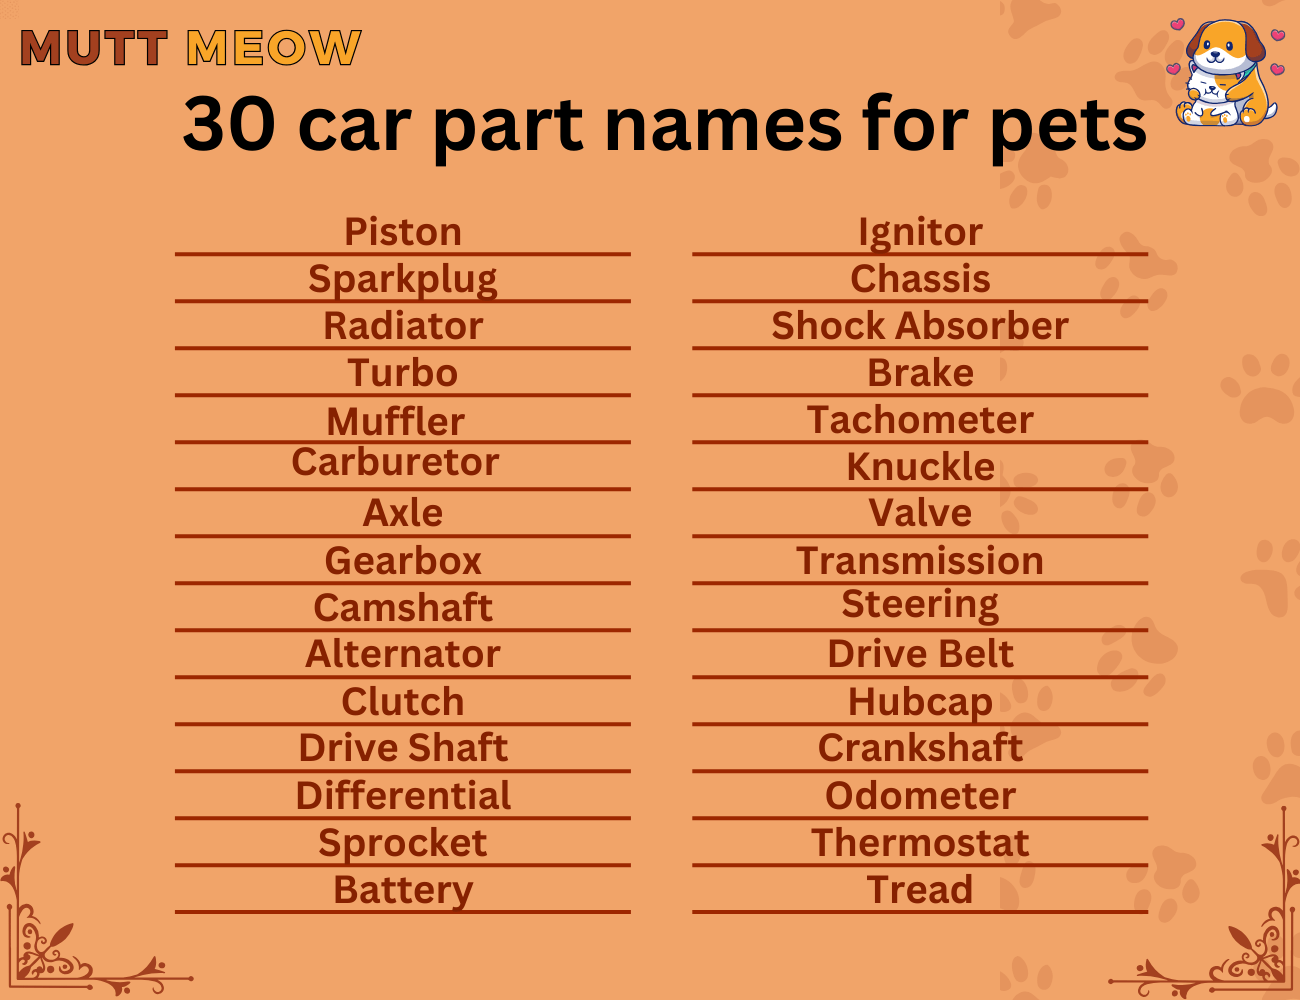 30 car part names for pets